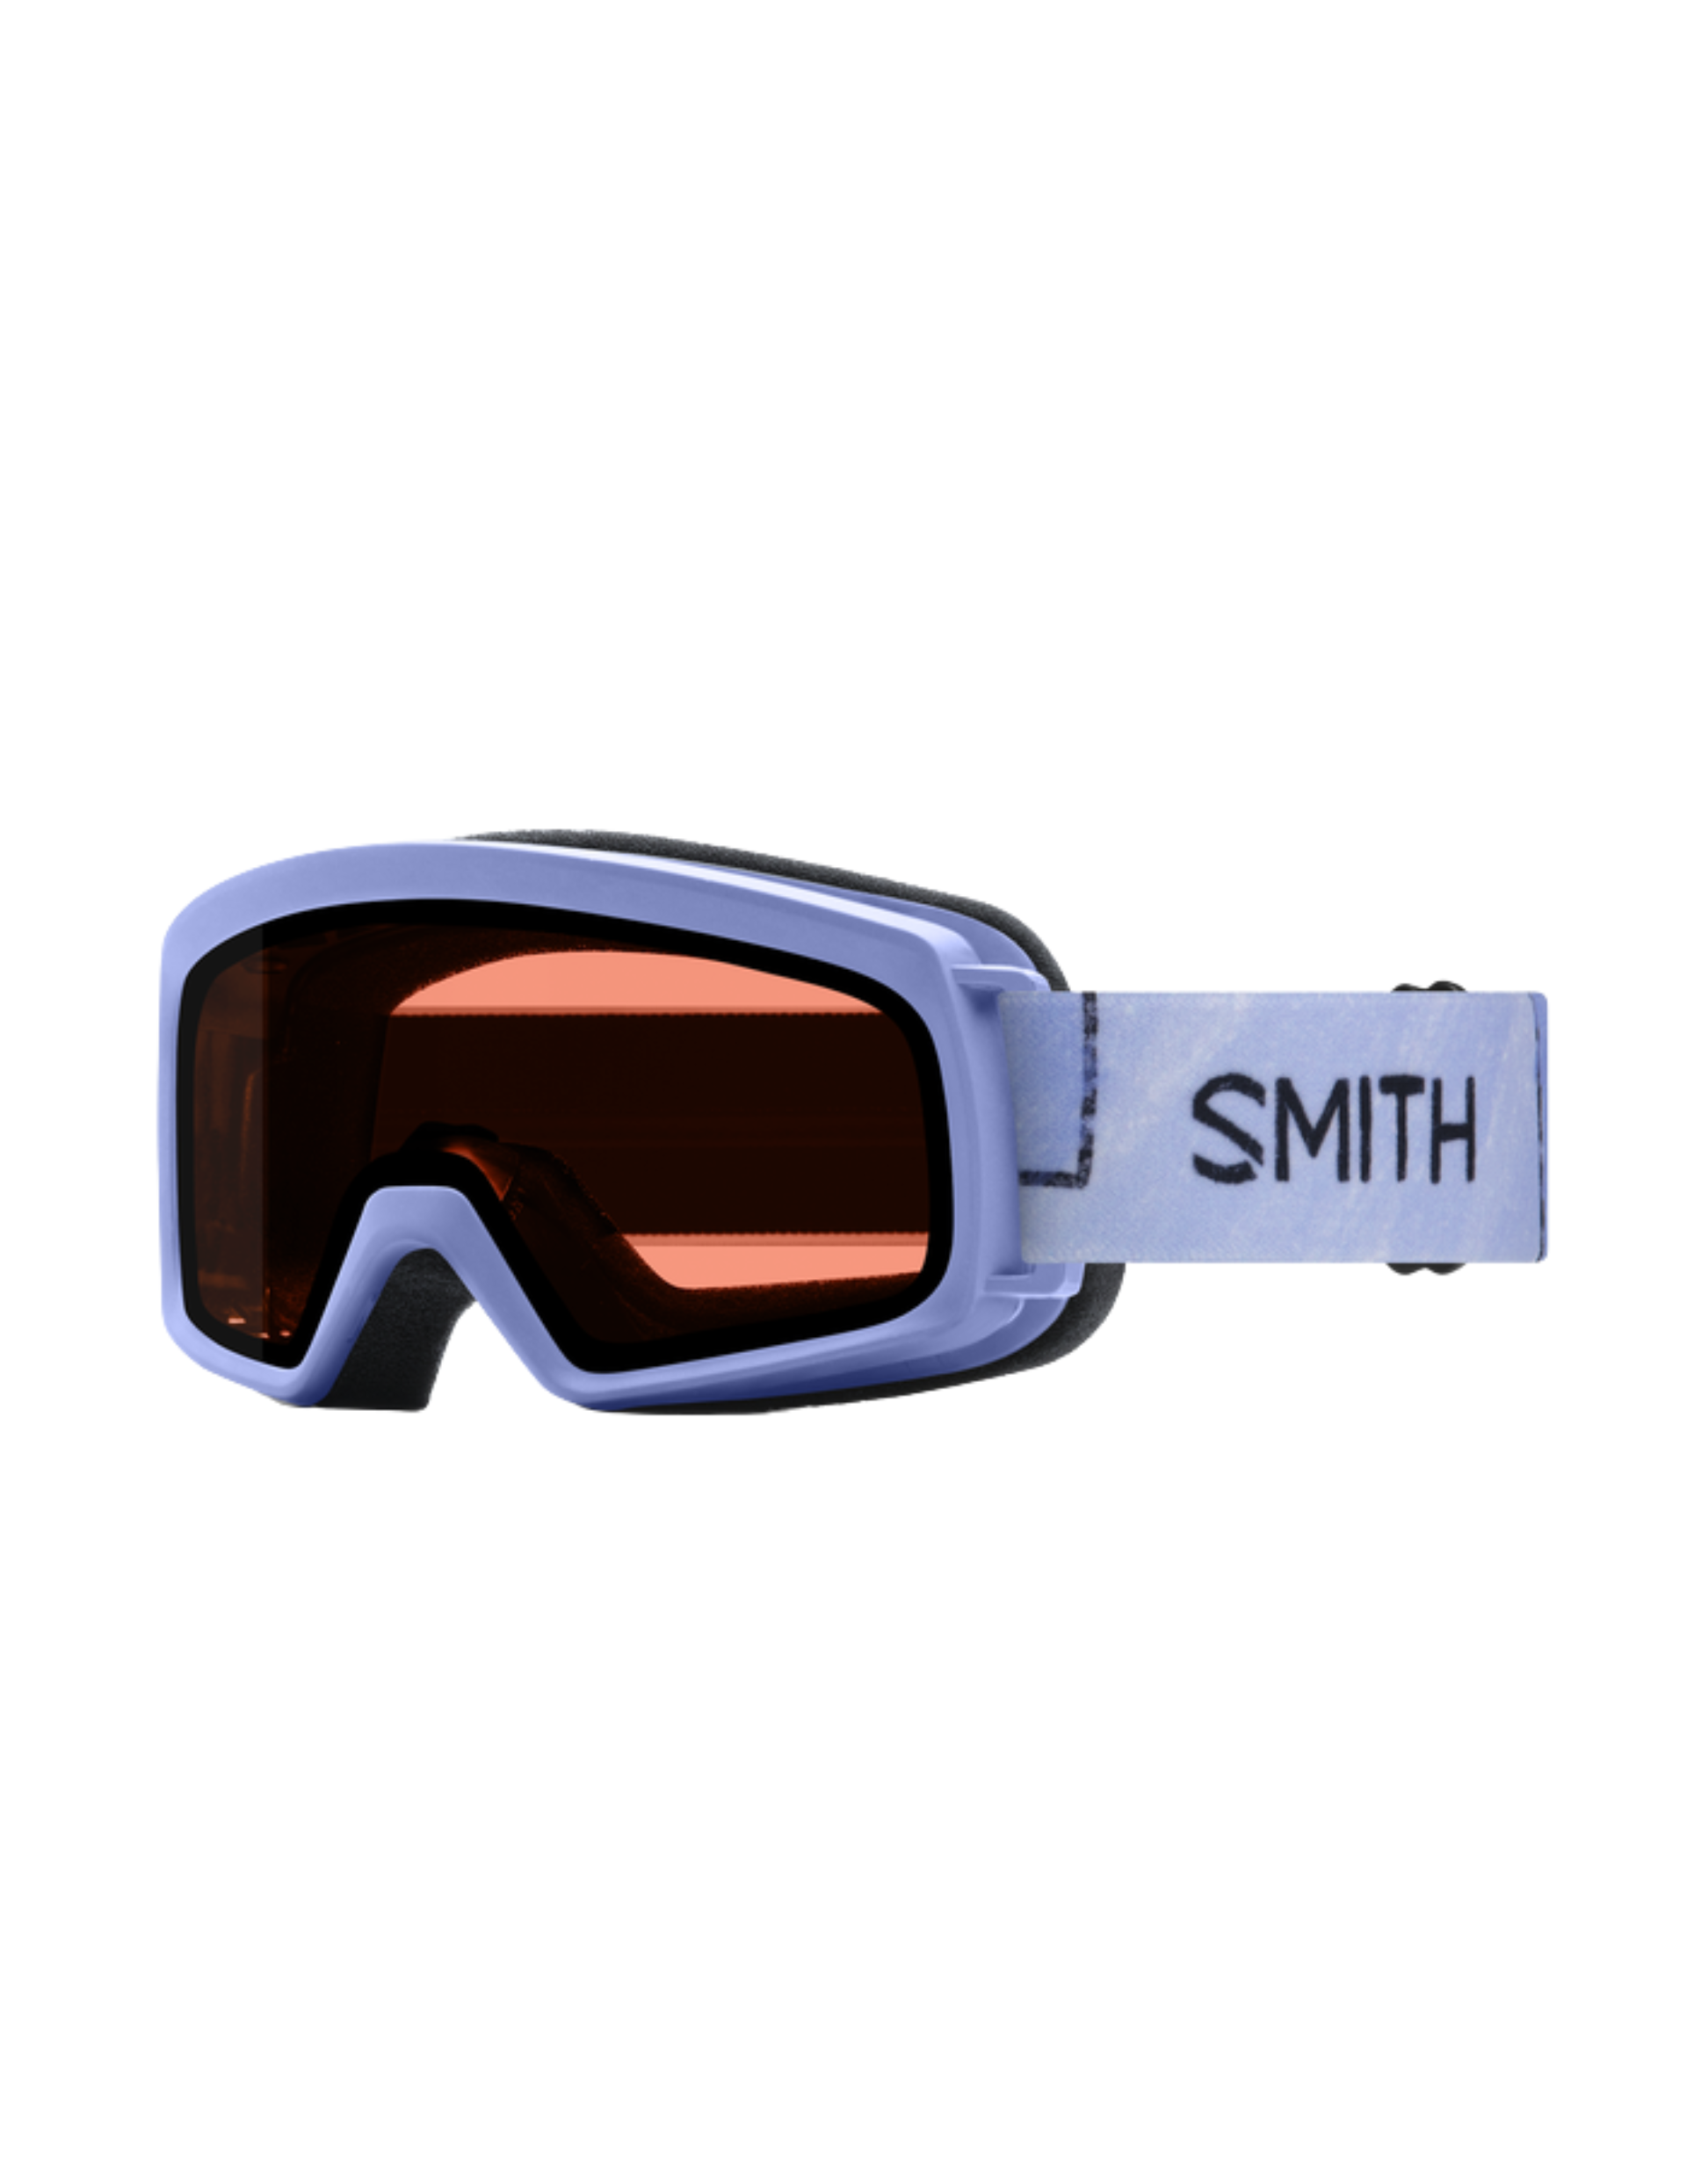 SMITH Masque de Ski Smith Rascal Enfant Violet, Masques et